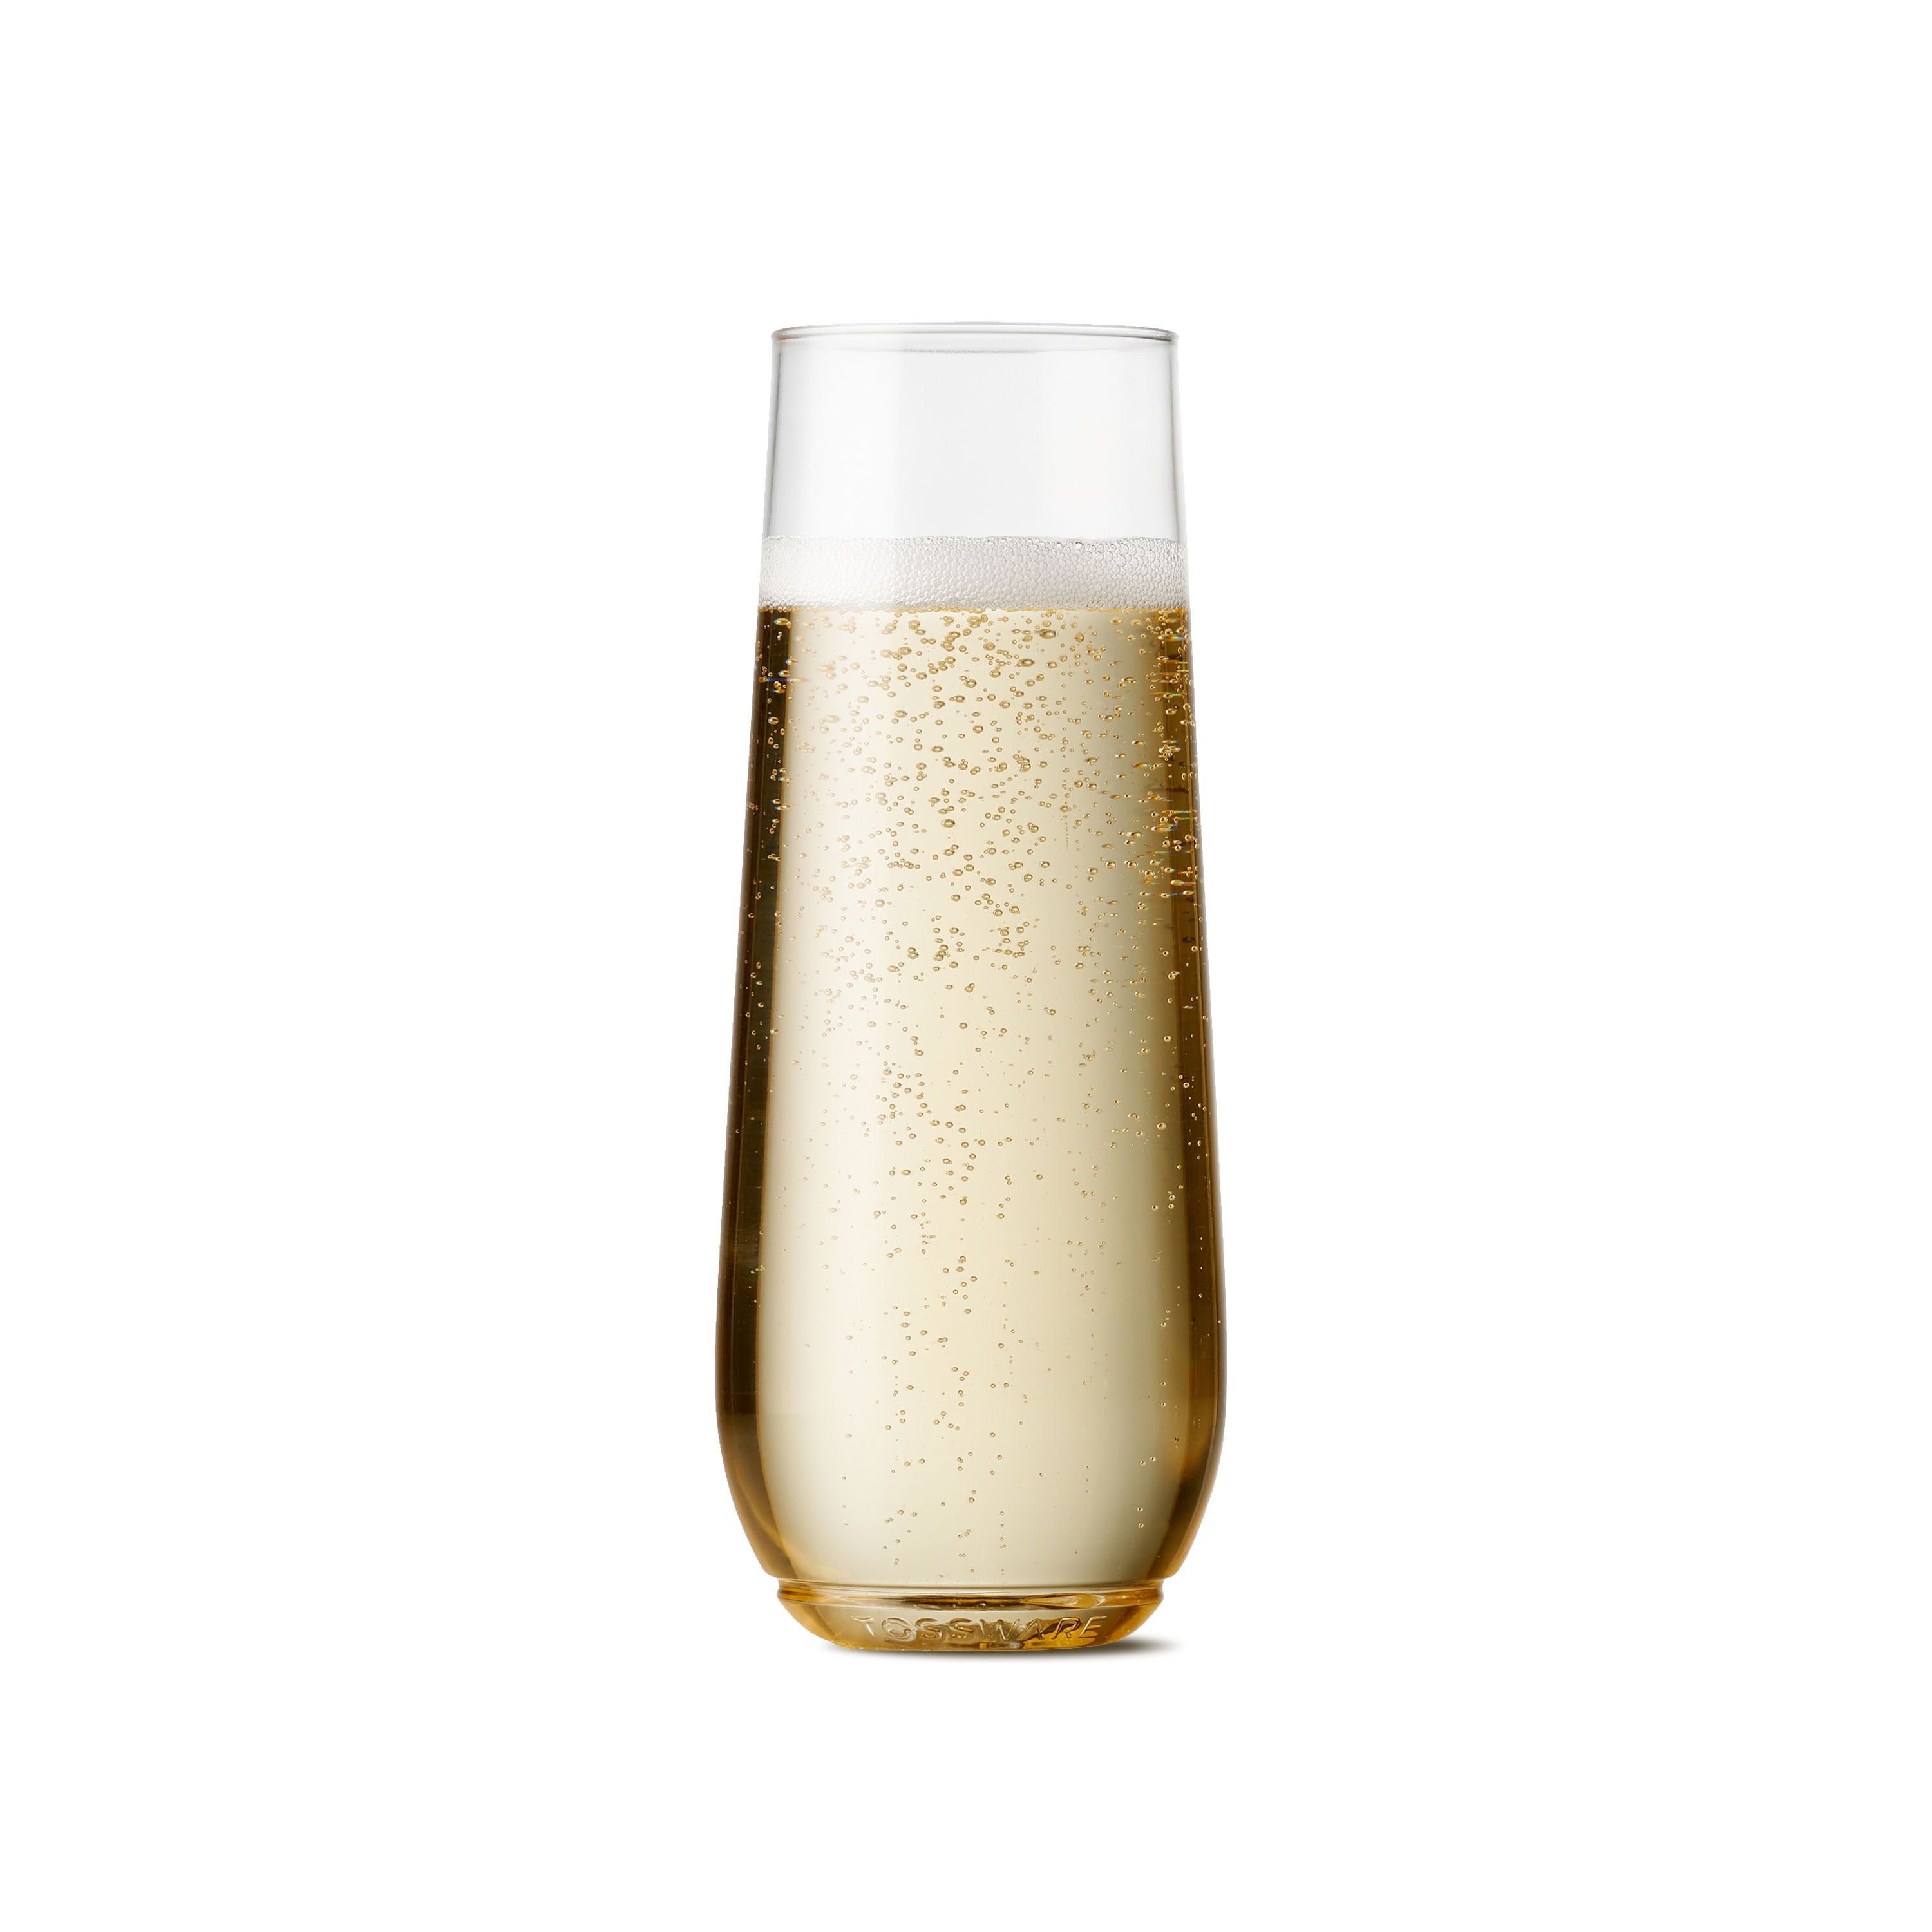 GLASS Venice Champagne Flute Clear (Set of 4) - BB-2208 - Beatriz